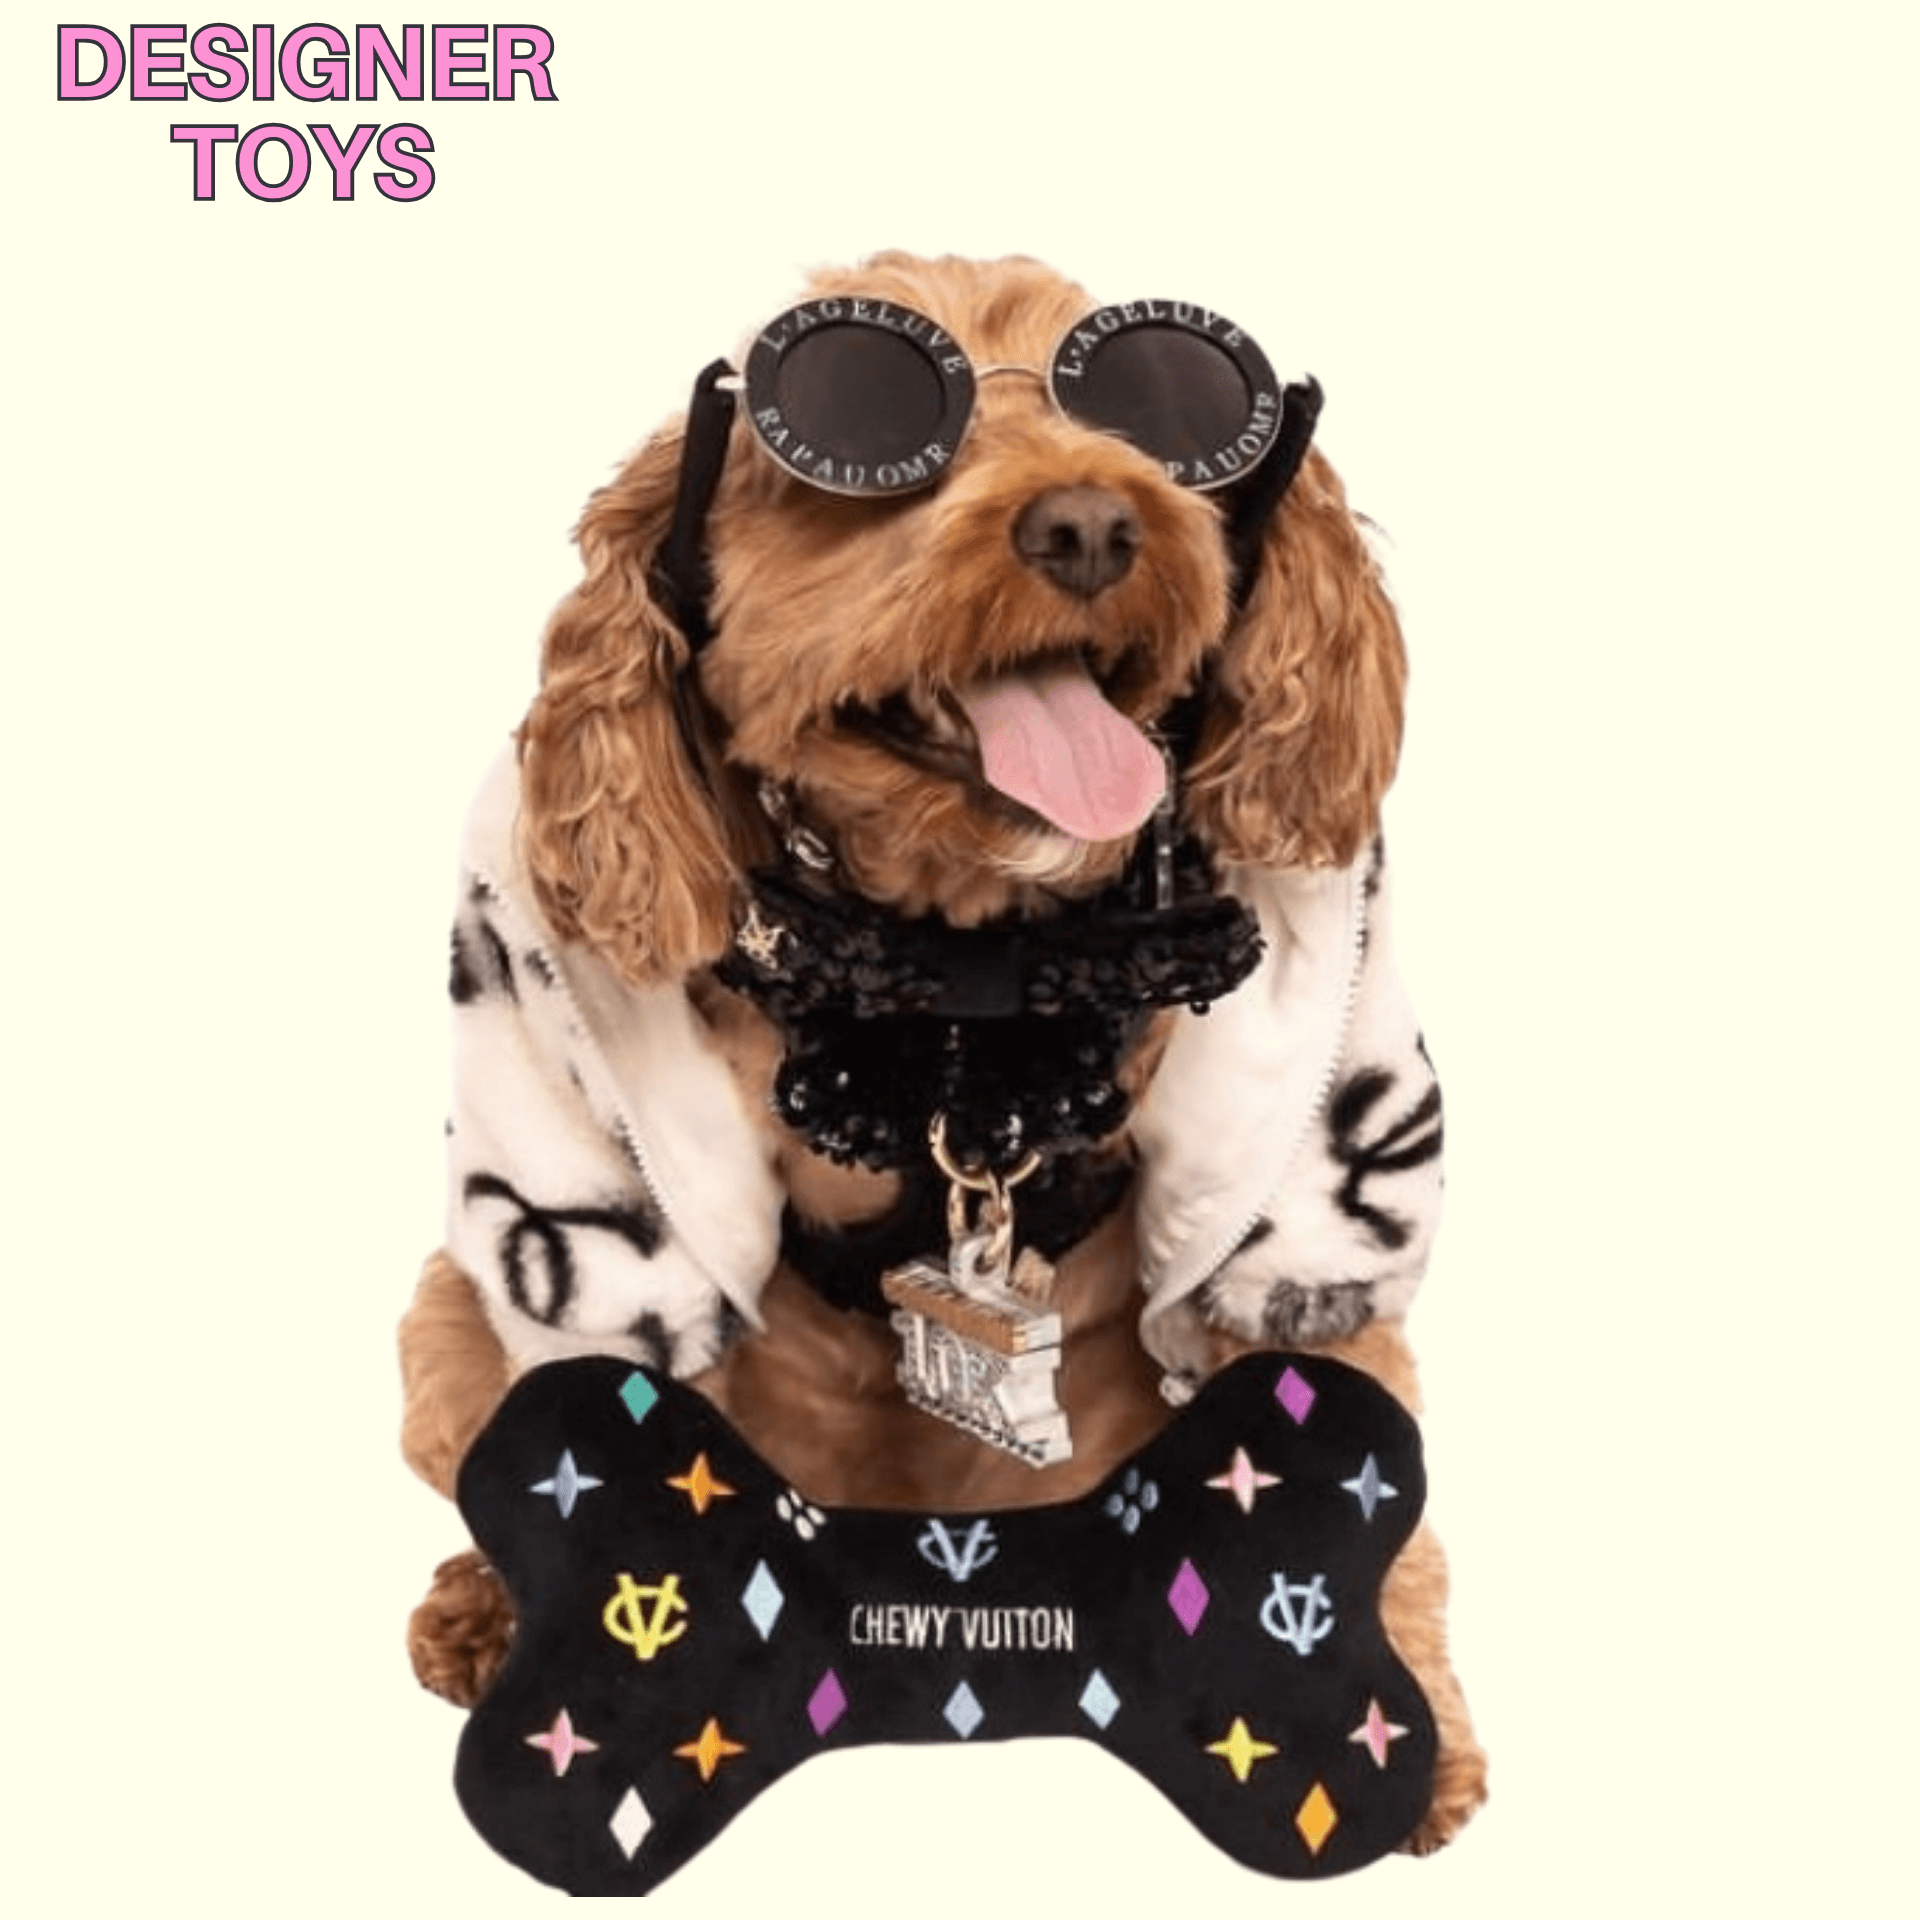 Chewy Vuiton Checker Handbag Dog Toy, DoggyTopia